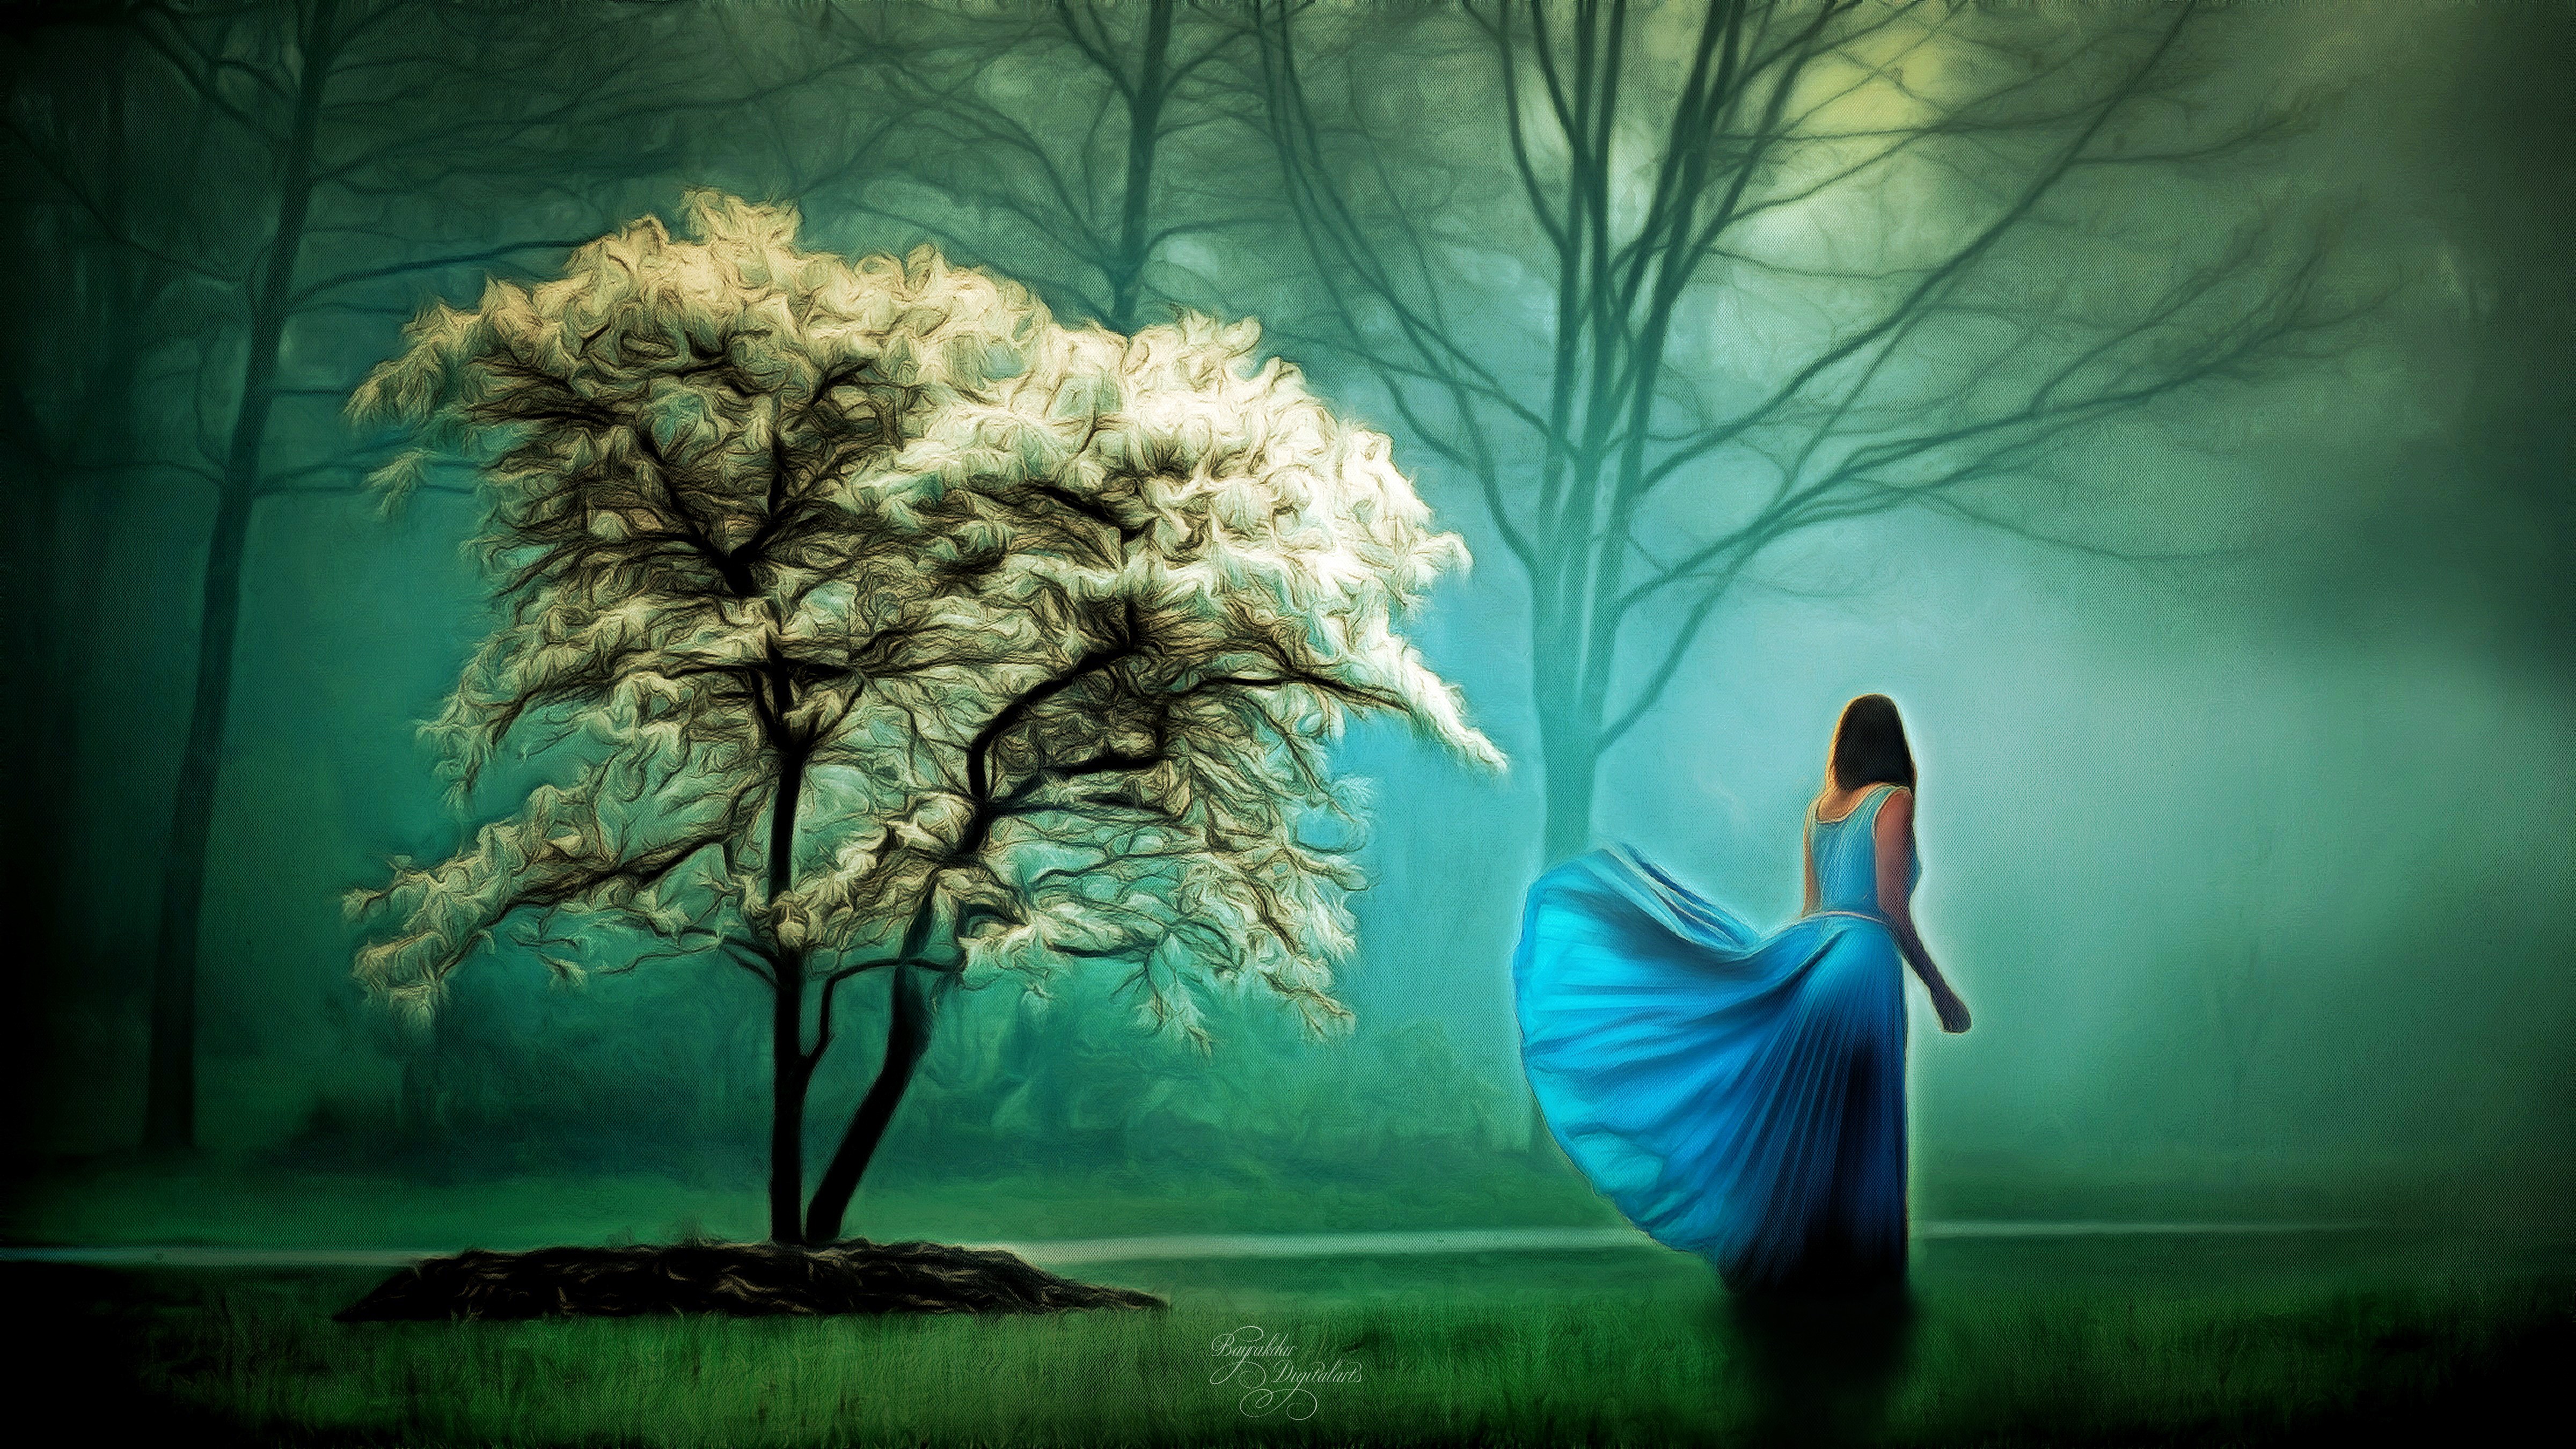 General 4800x2700 artwork painting women women outdoors forest trees dress plants blue dress blue clothing dark hair